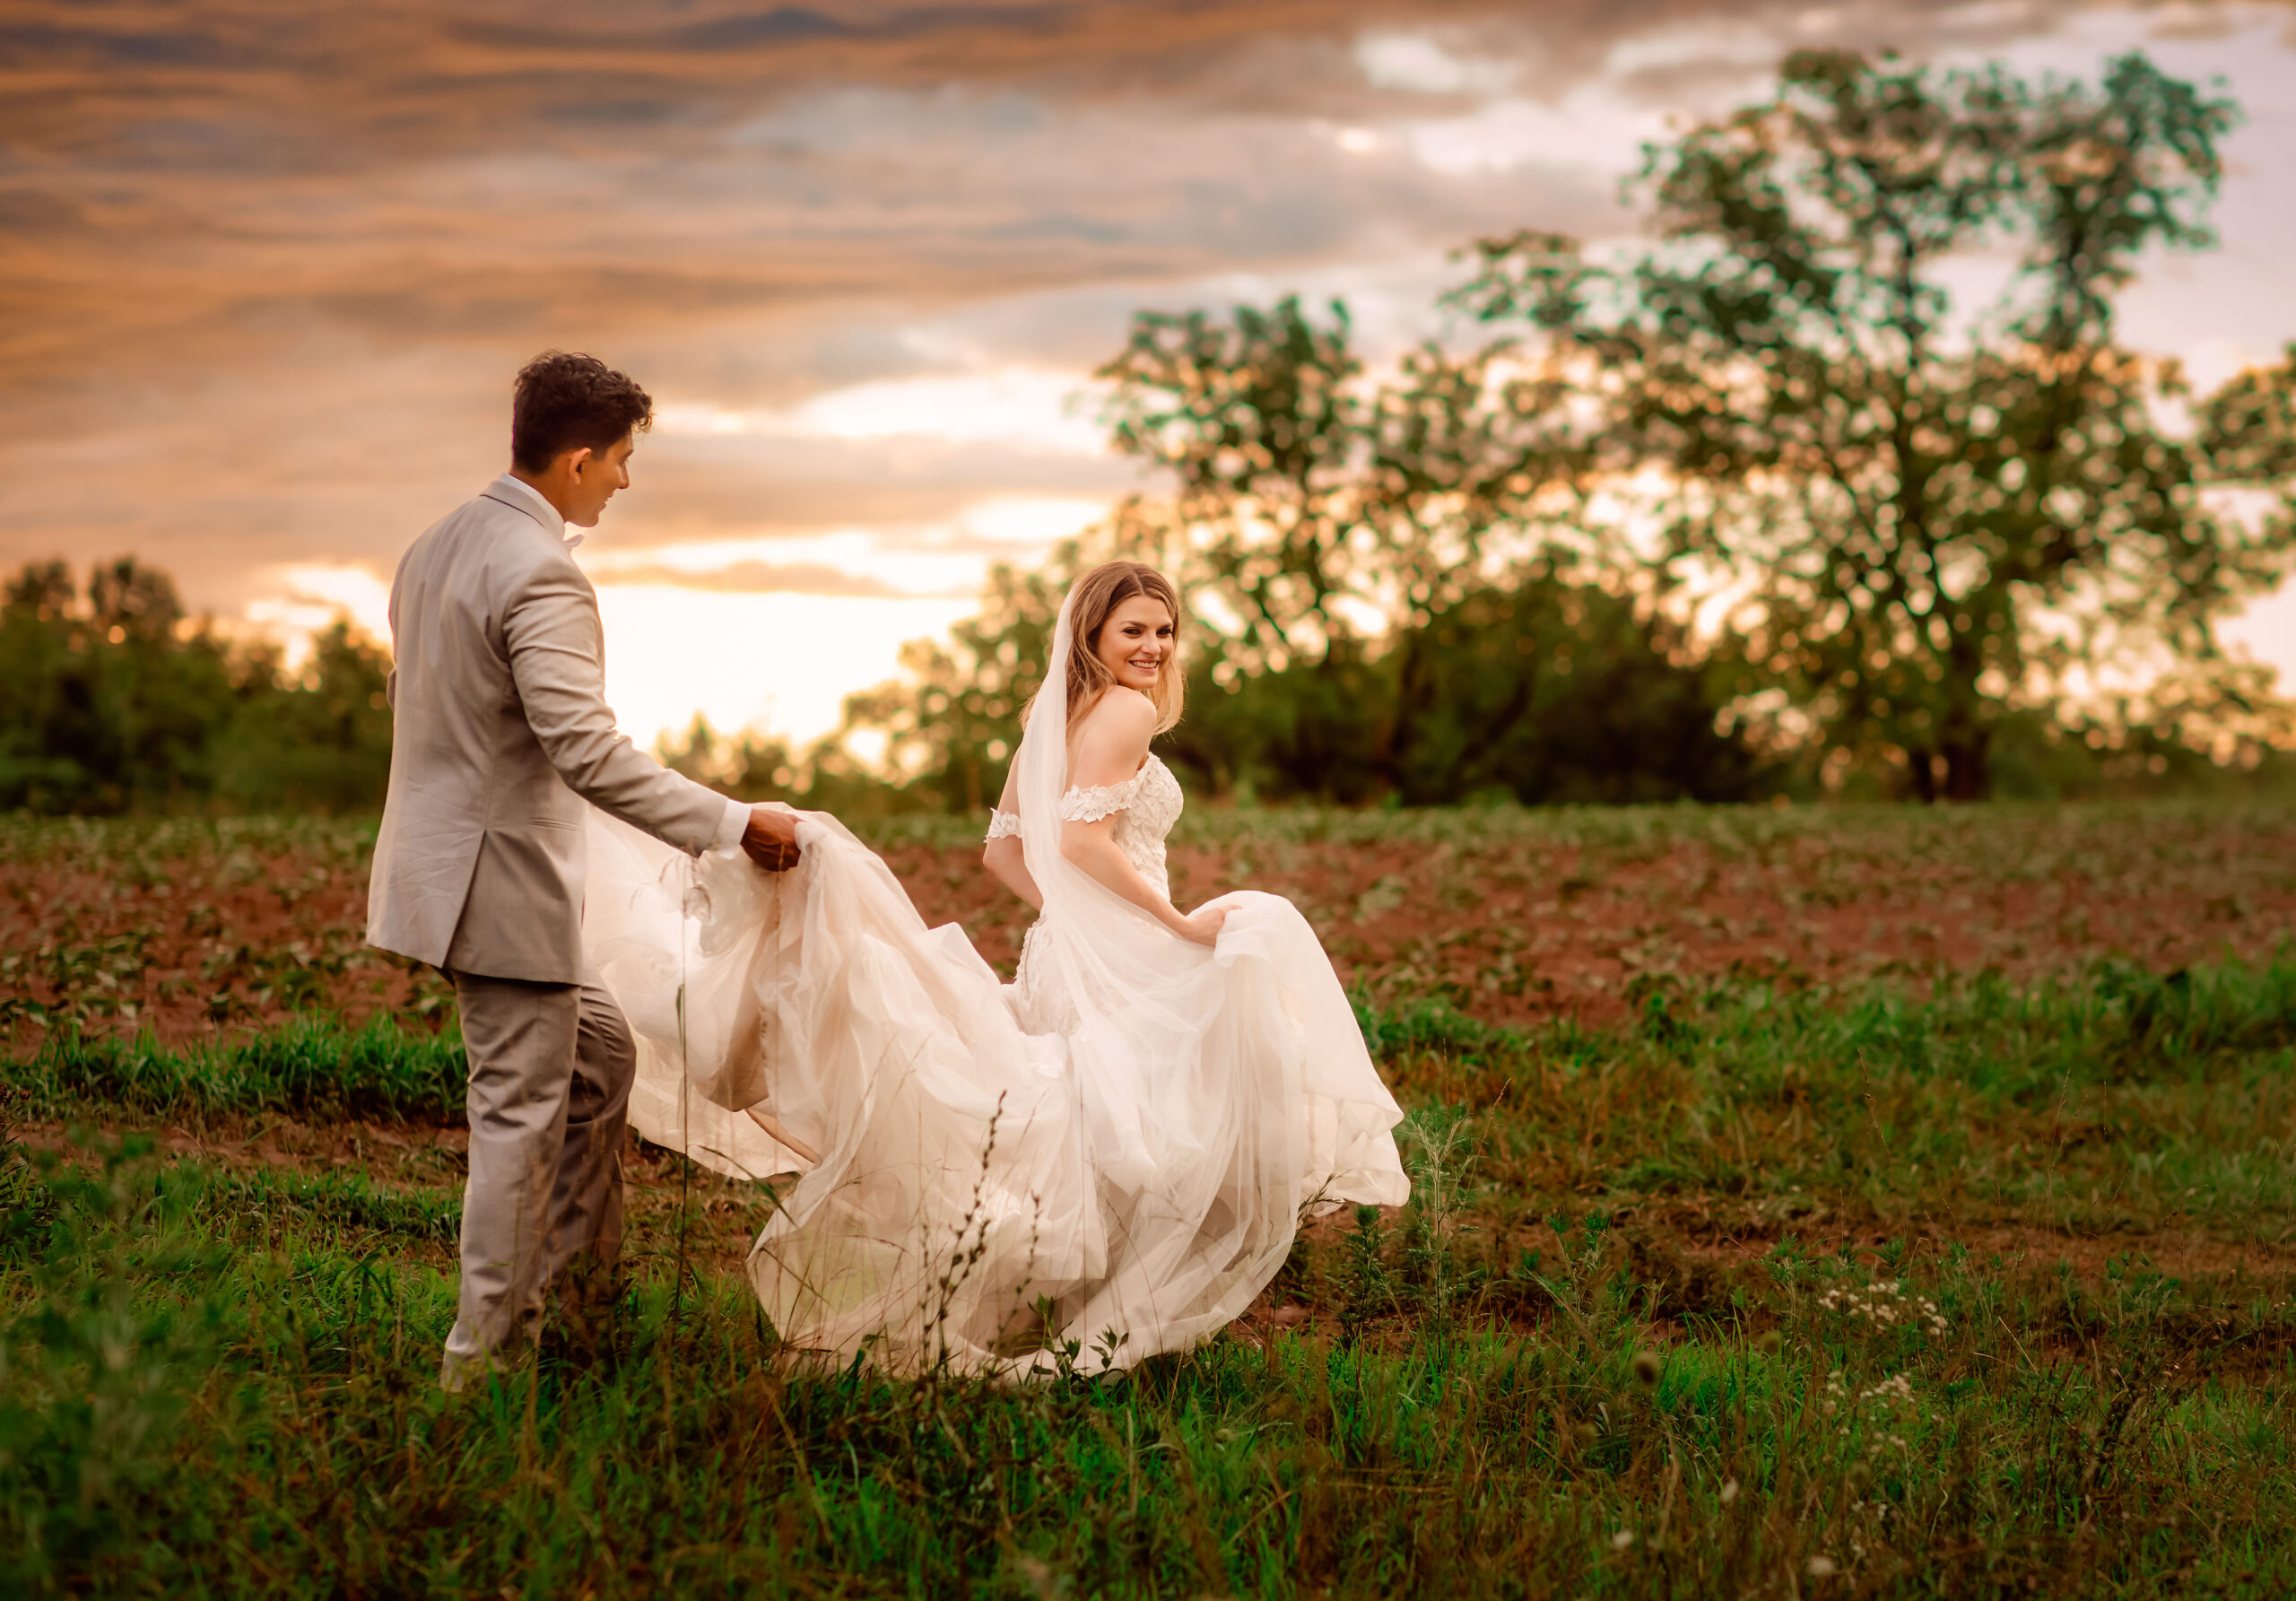 choosing a wedding photographer